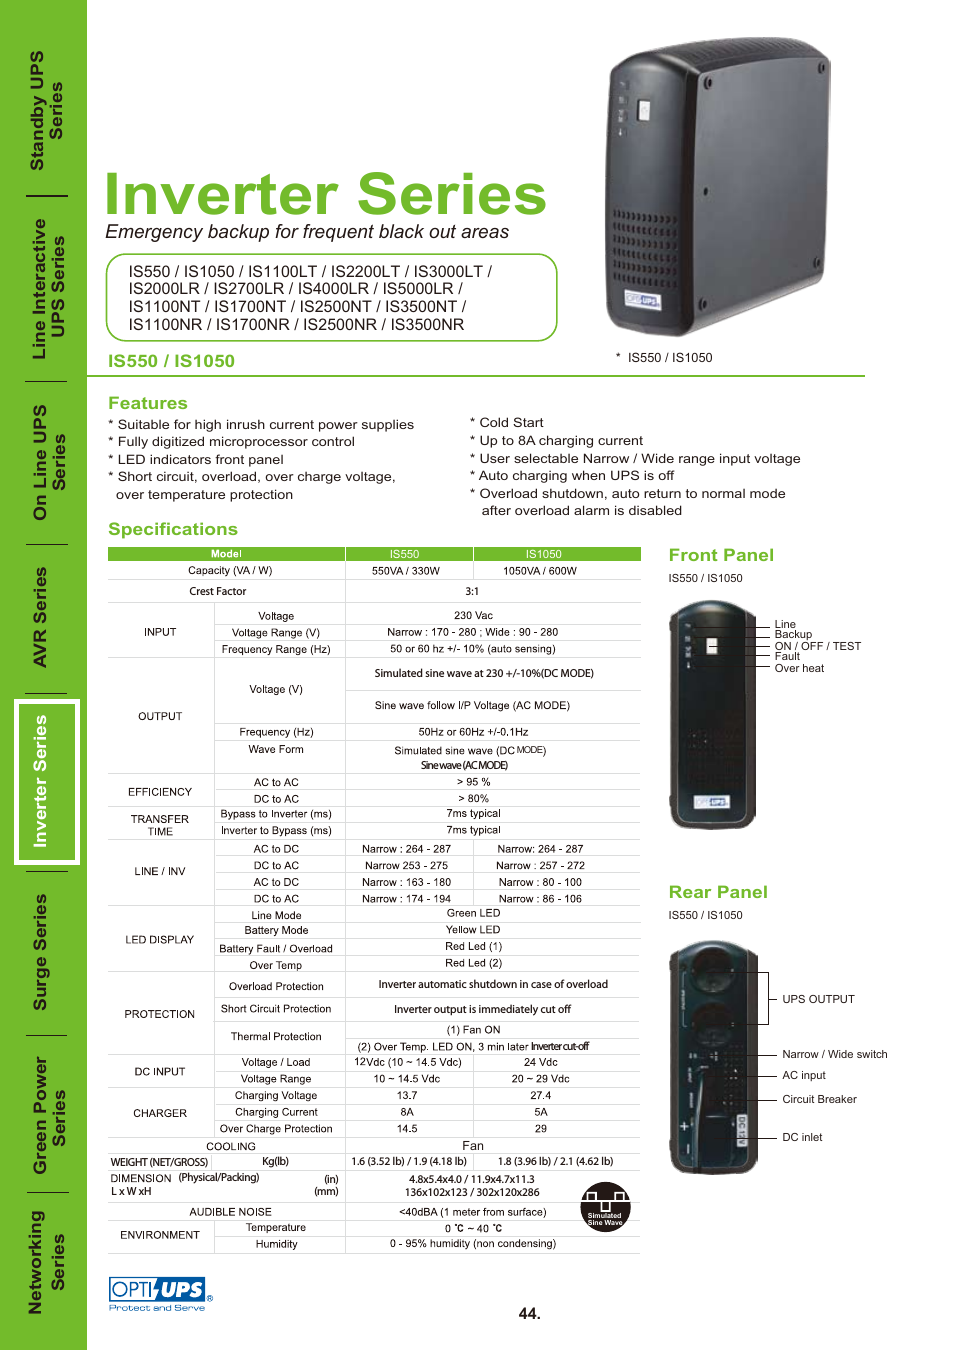 Inverter Series IS2700LR